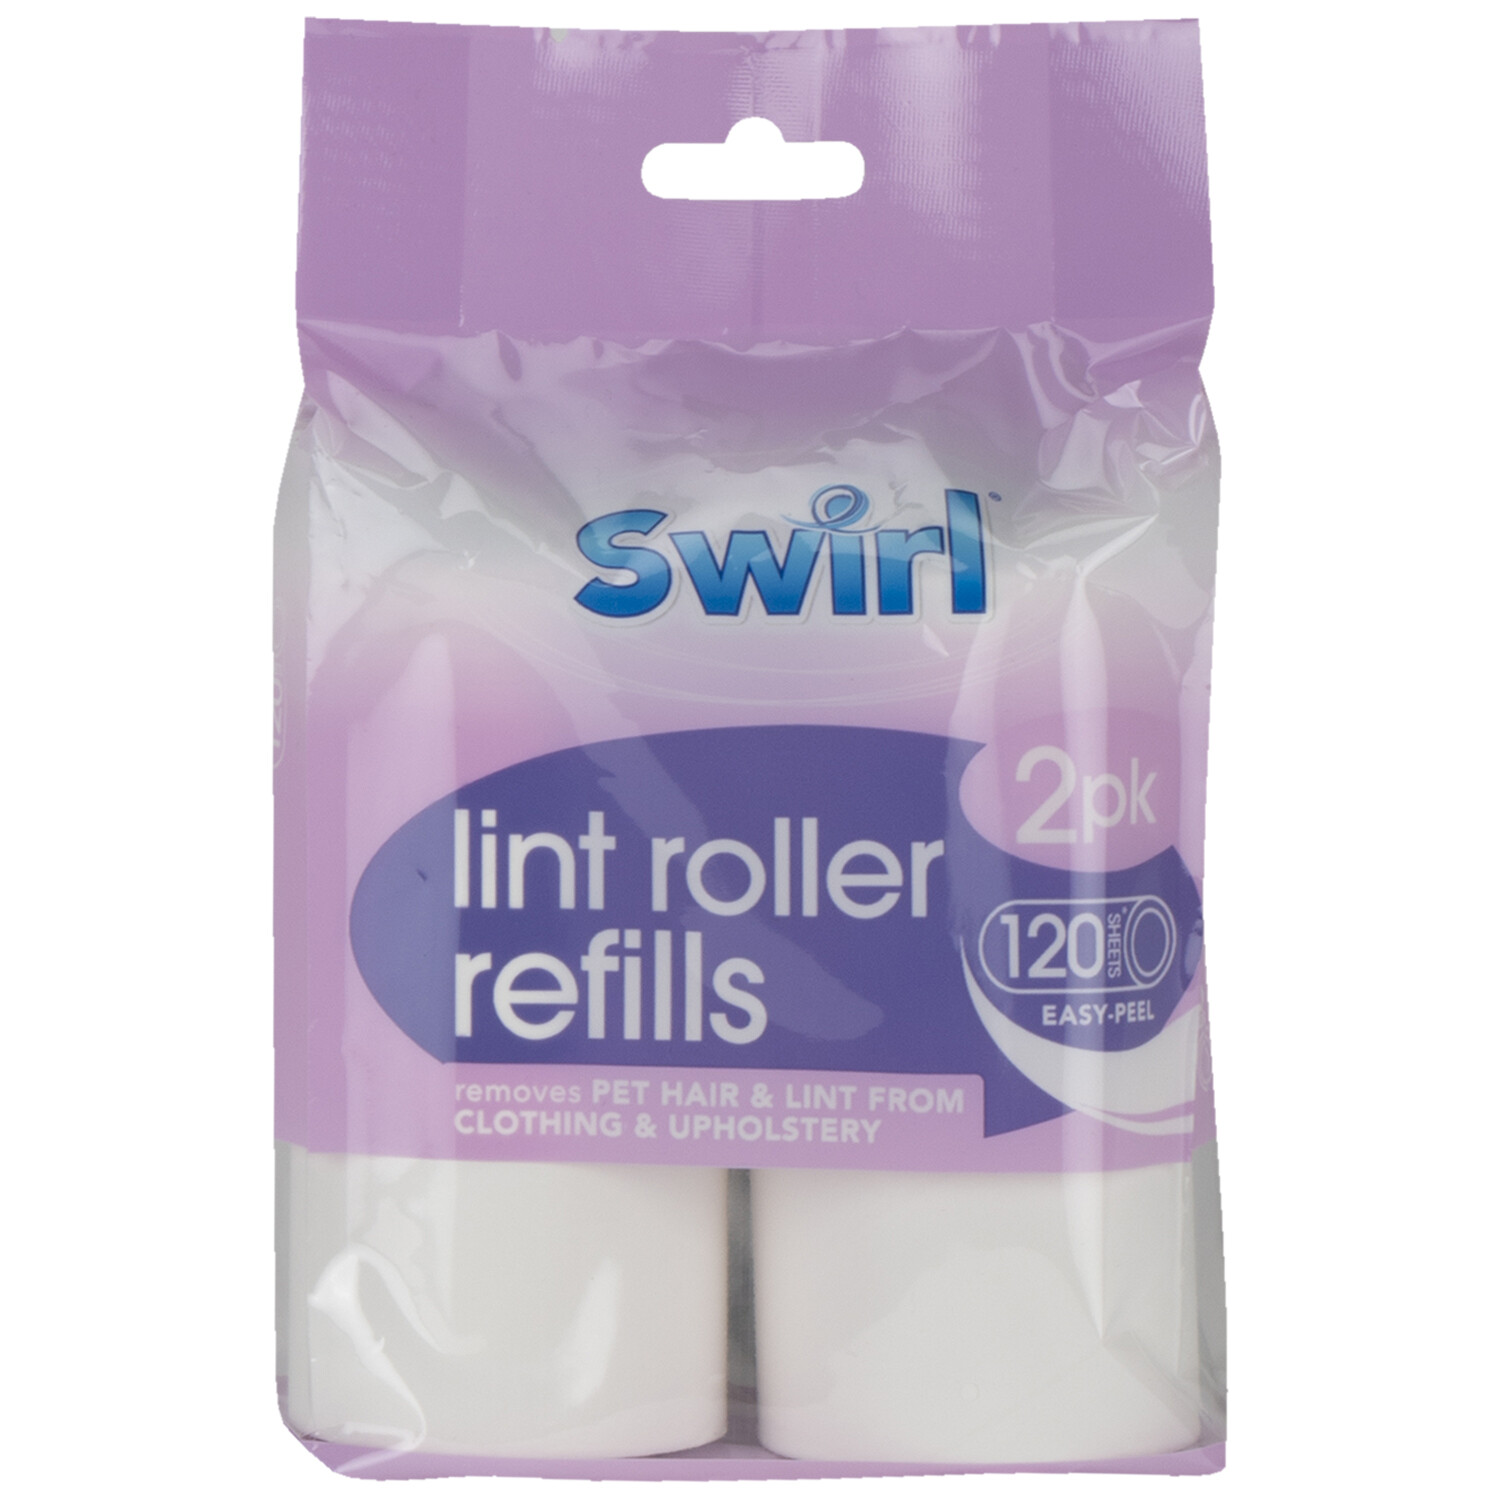 Swirl Lint Roller Refills 2 Pack Image